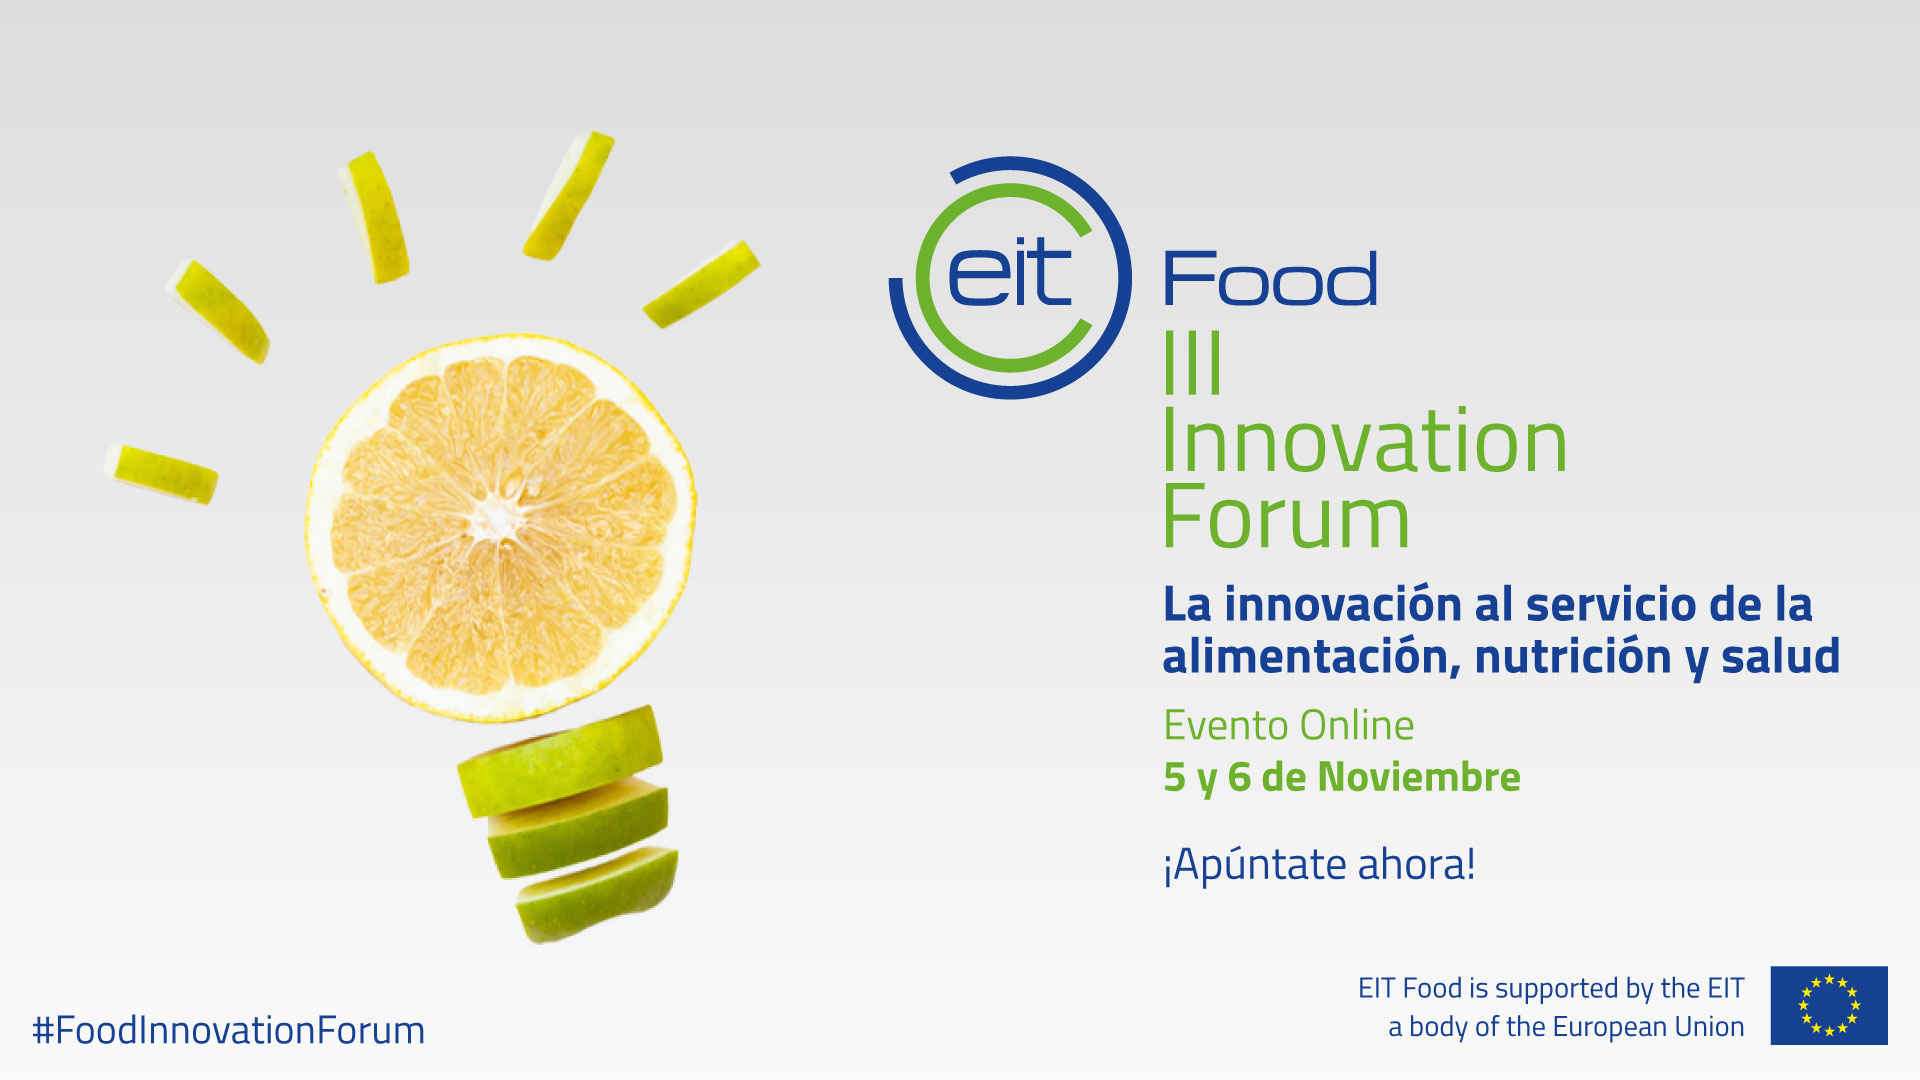 III Innovation Fórum de EIT Food